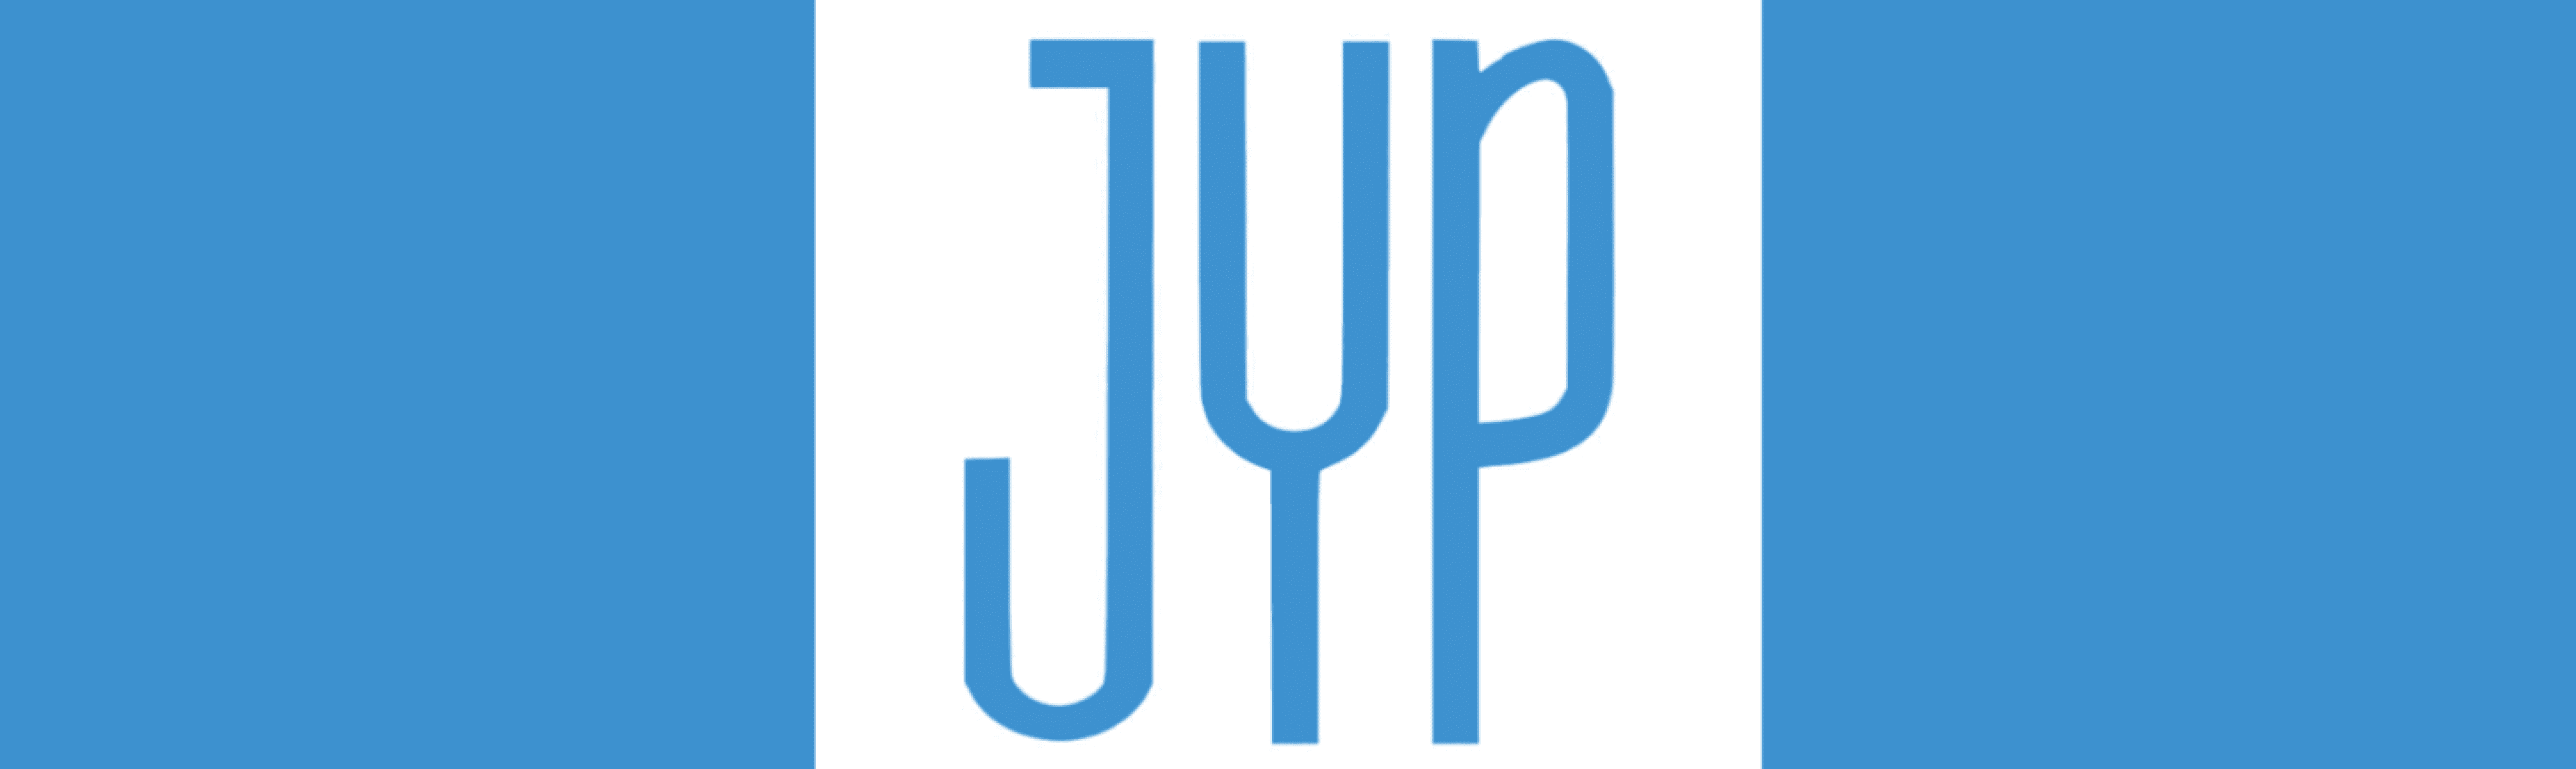 JYP Entertainment logo: blue lettering on white background